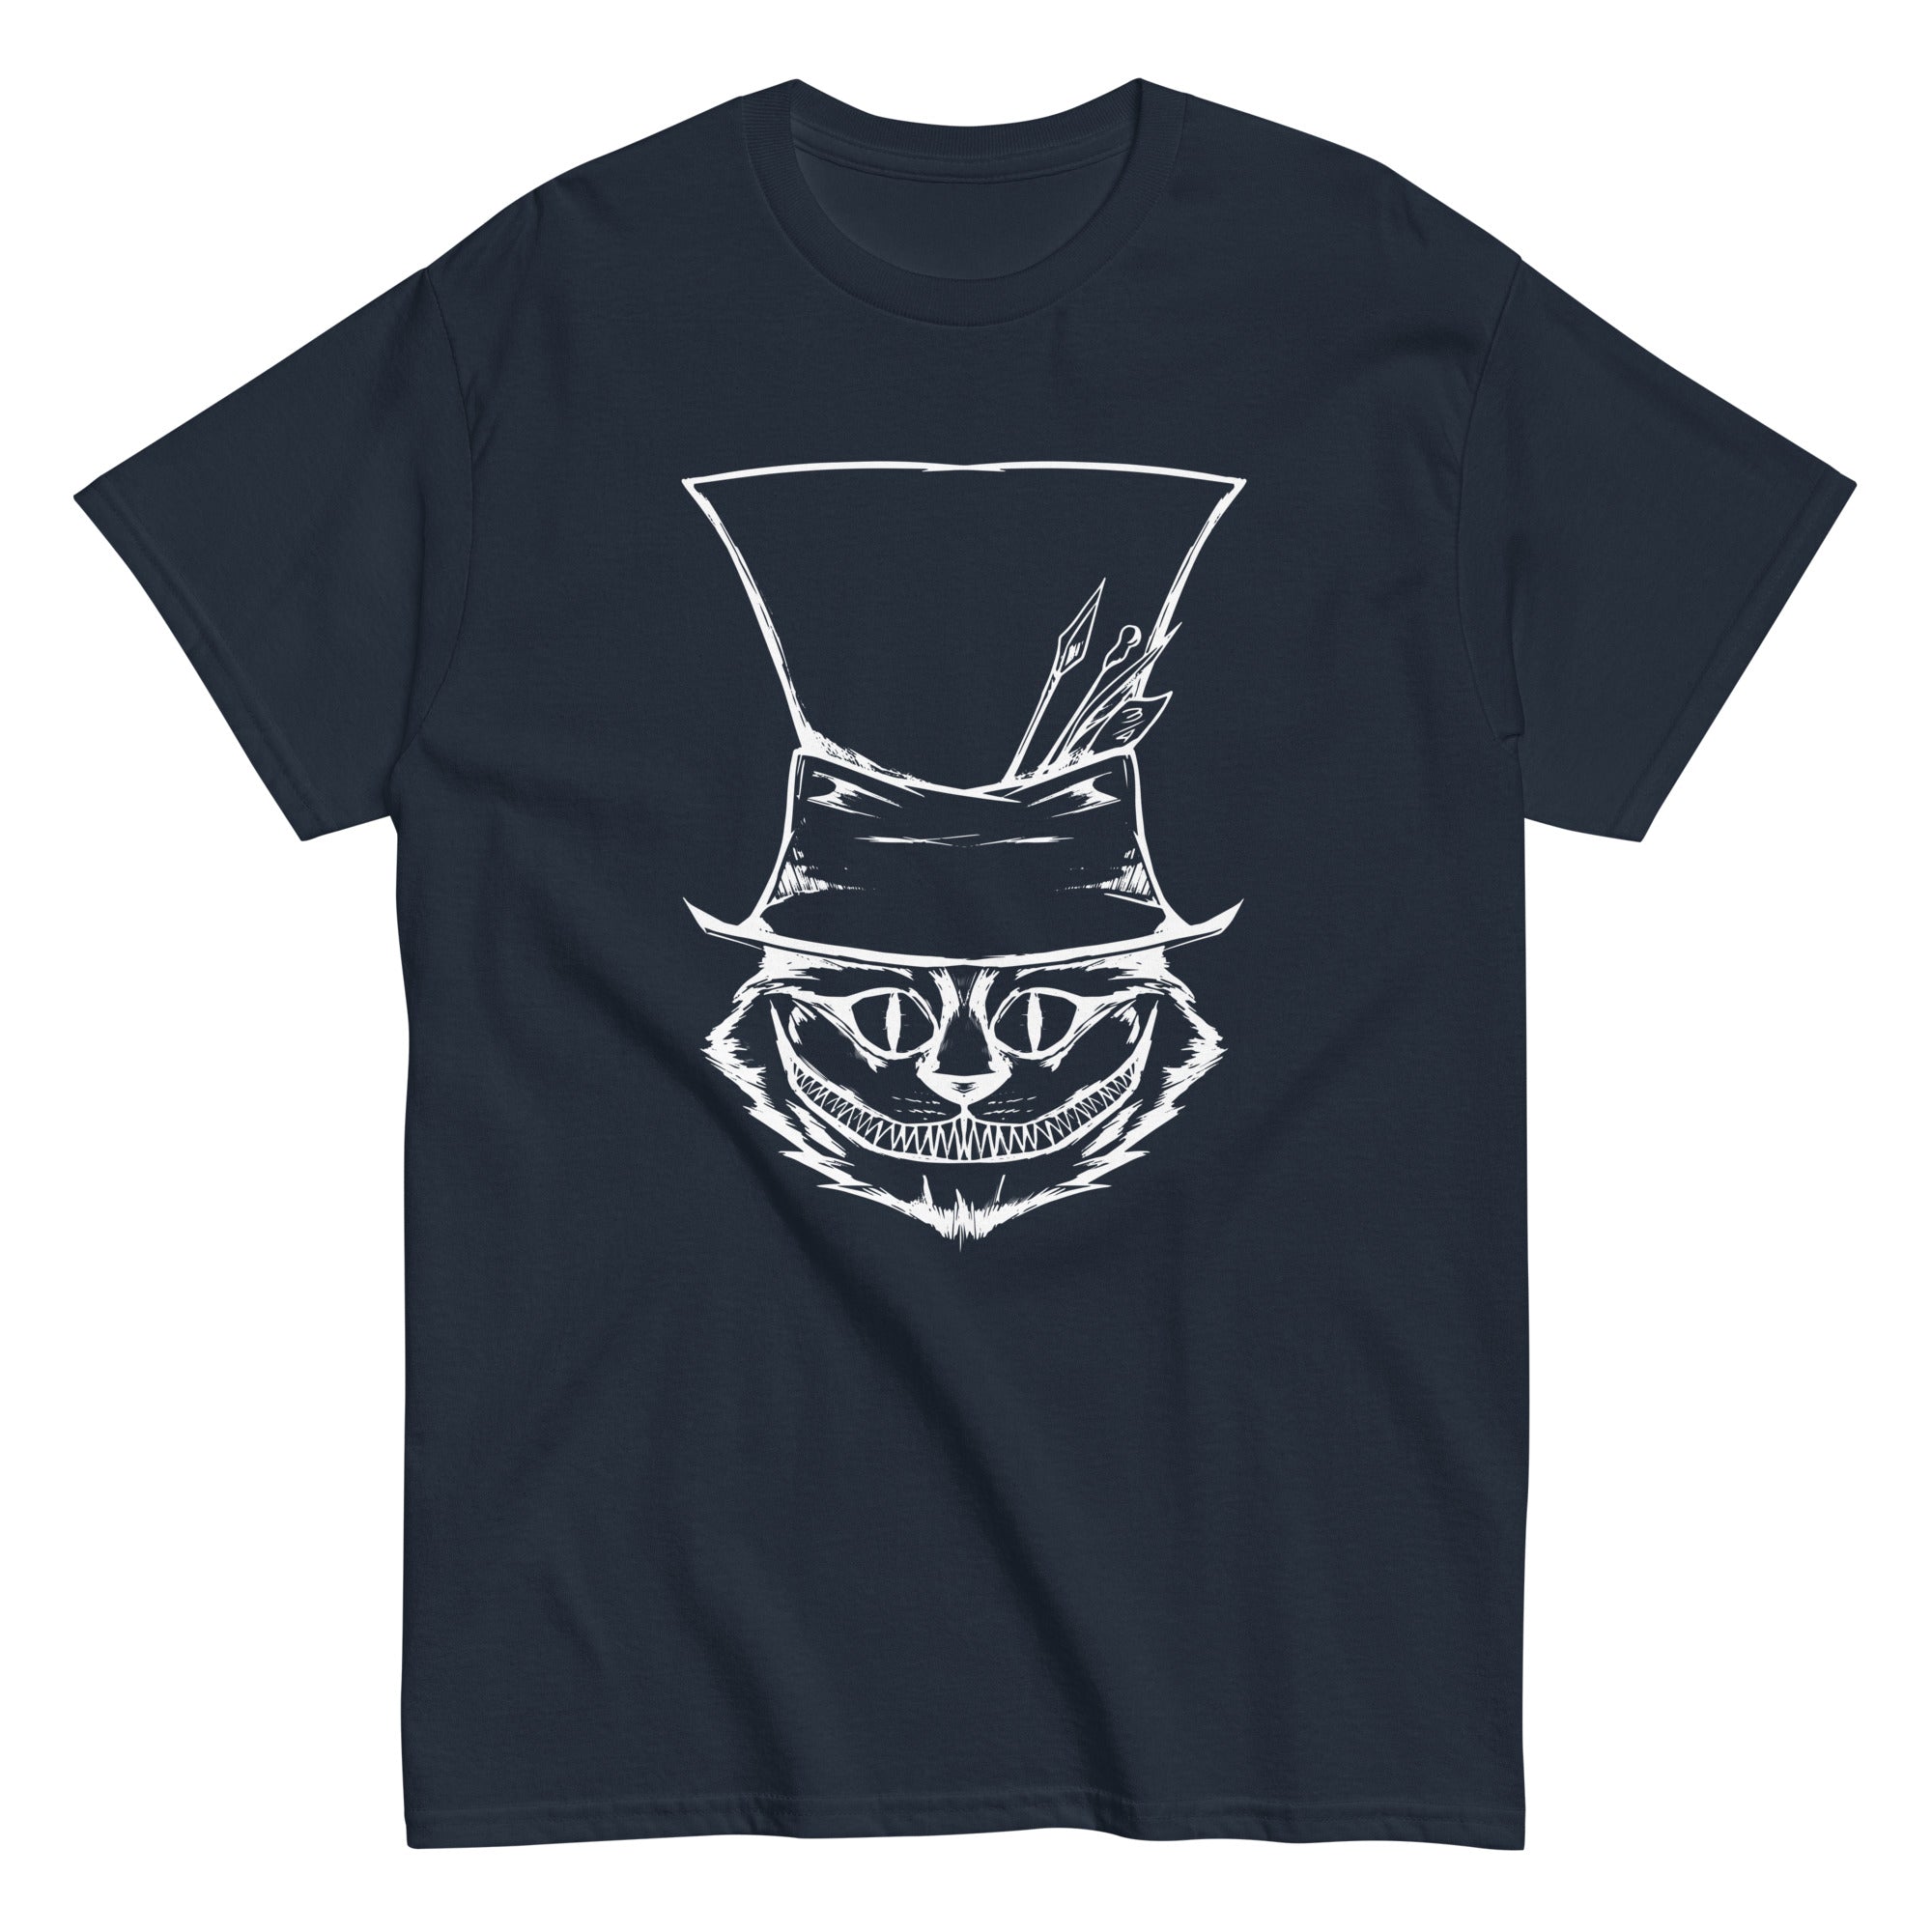 Cheshire Cat Sketch T-Shirt